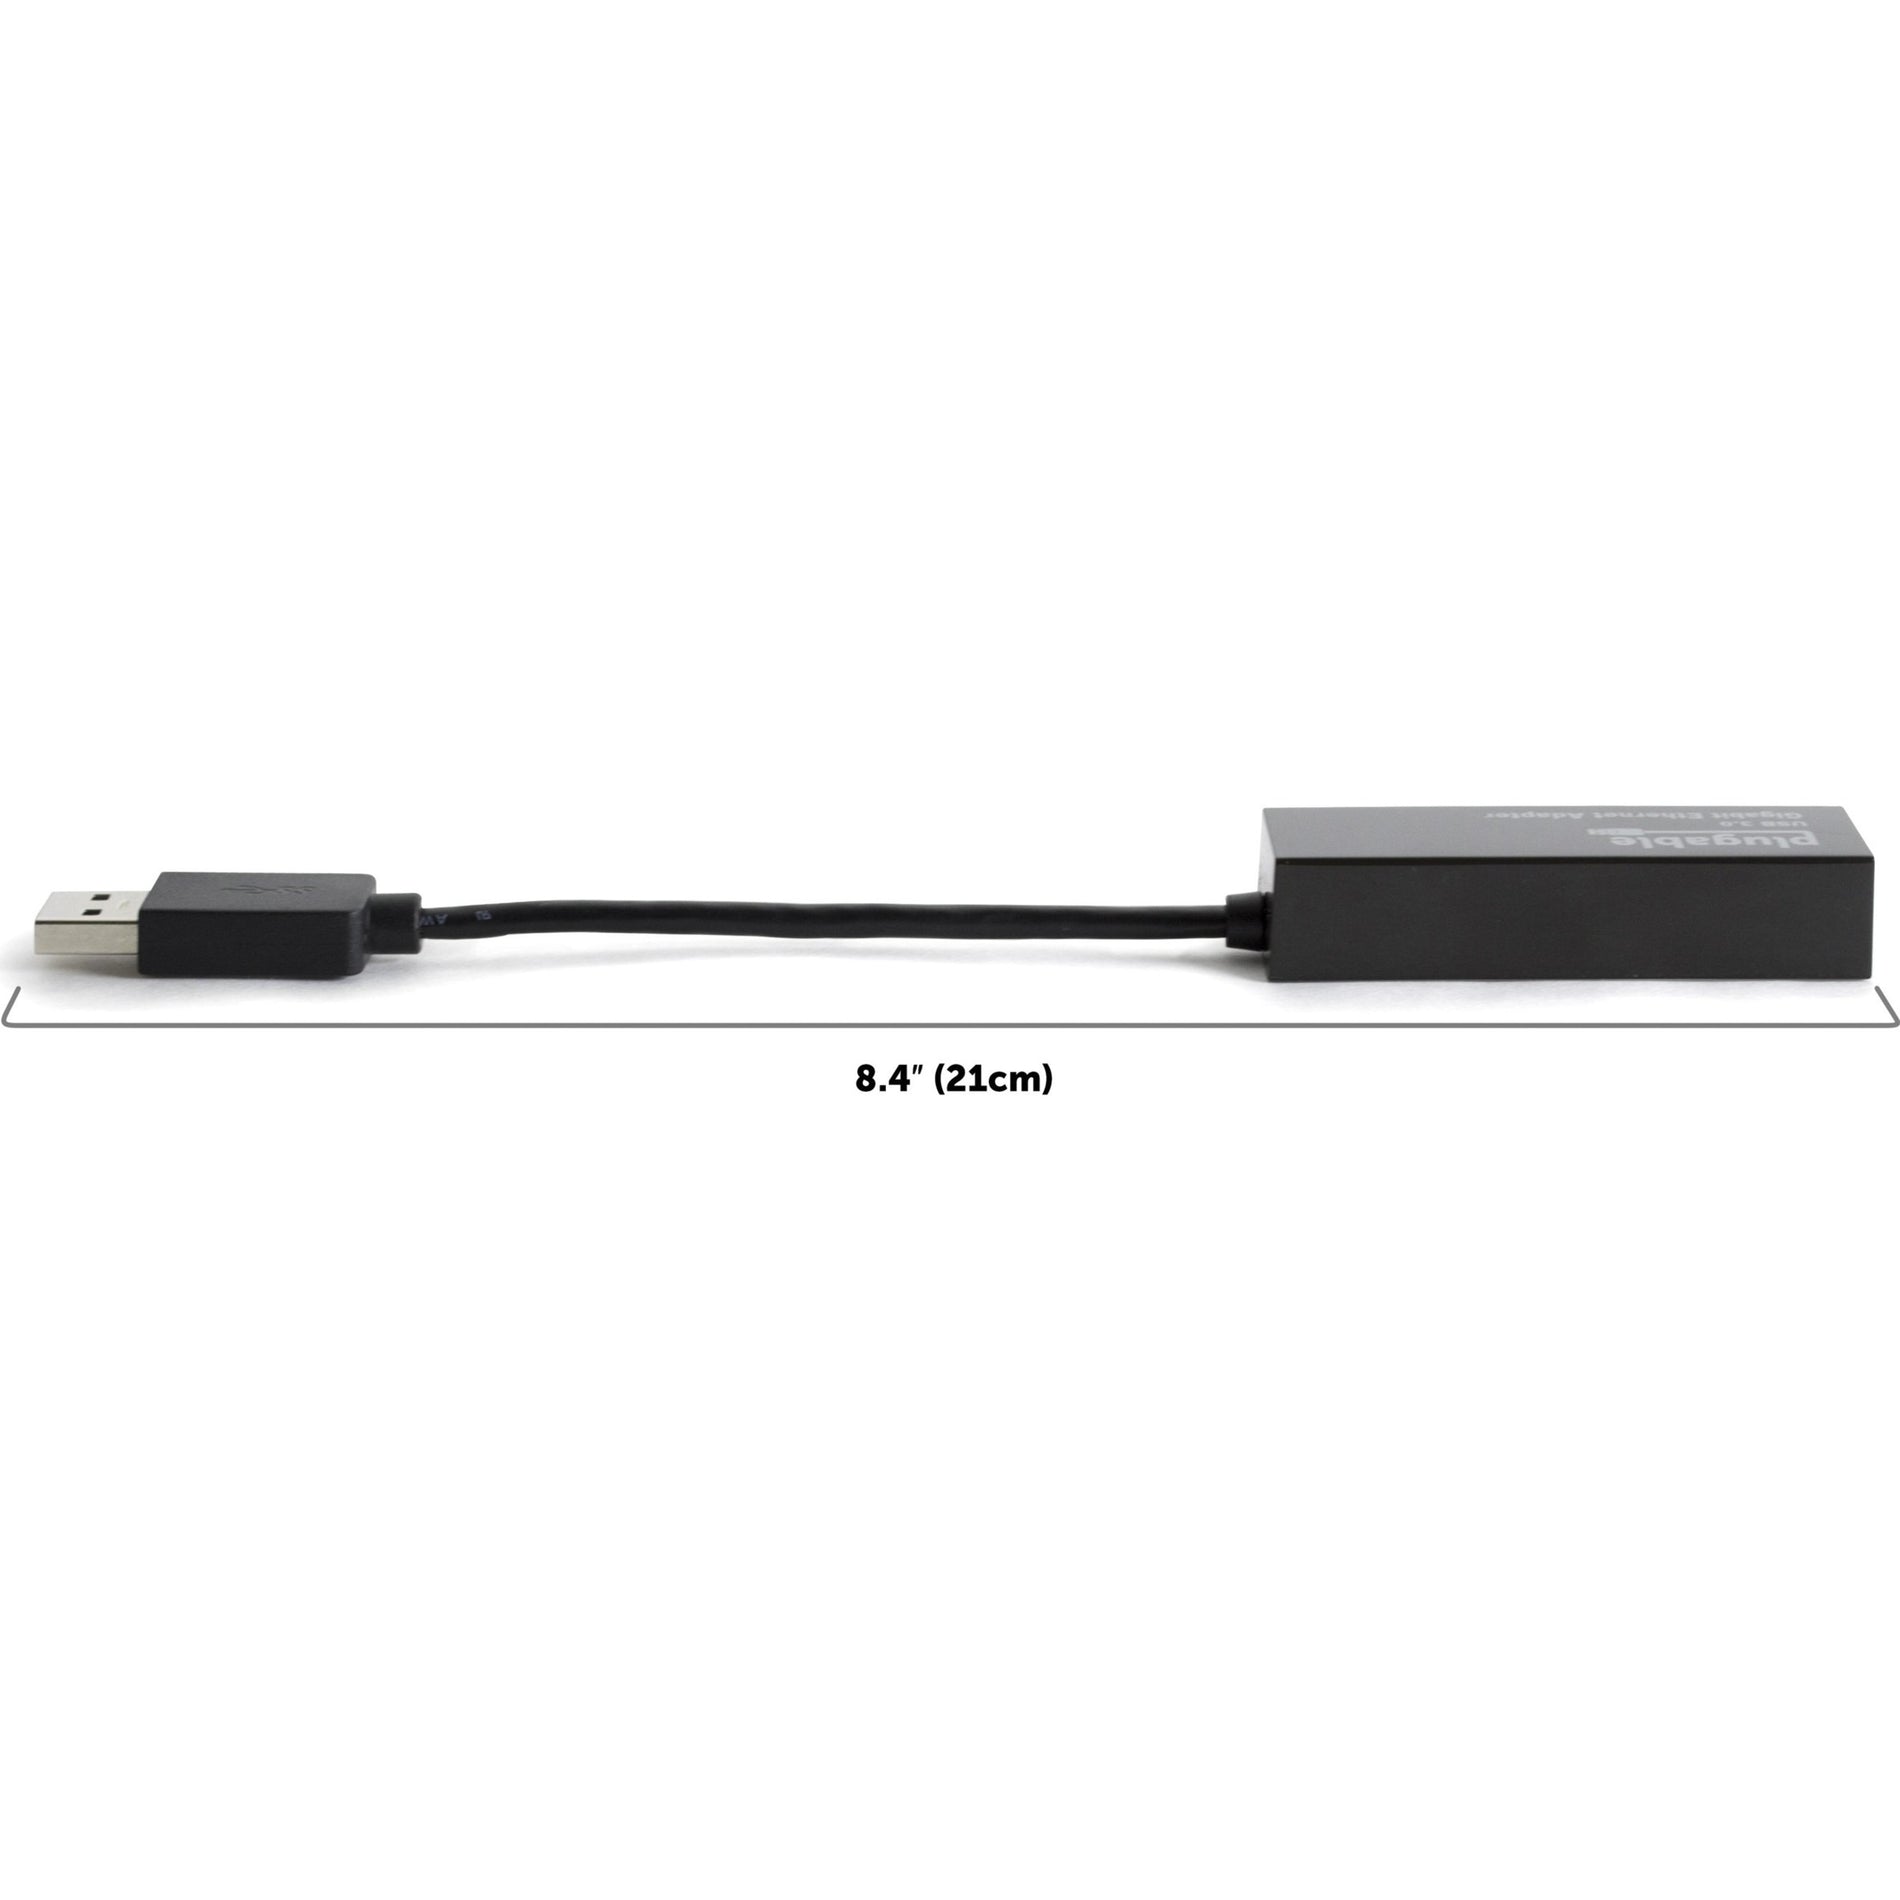 Plugable USB3-E1000 USB naar Ethernet-adapter USB 3.0 naar Gigabit Ethernet hoge-snelheid gegevensoverdracht.